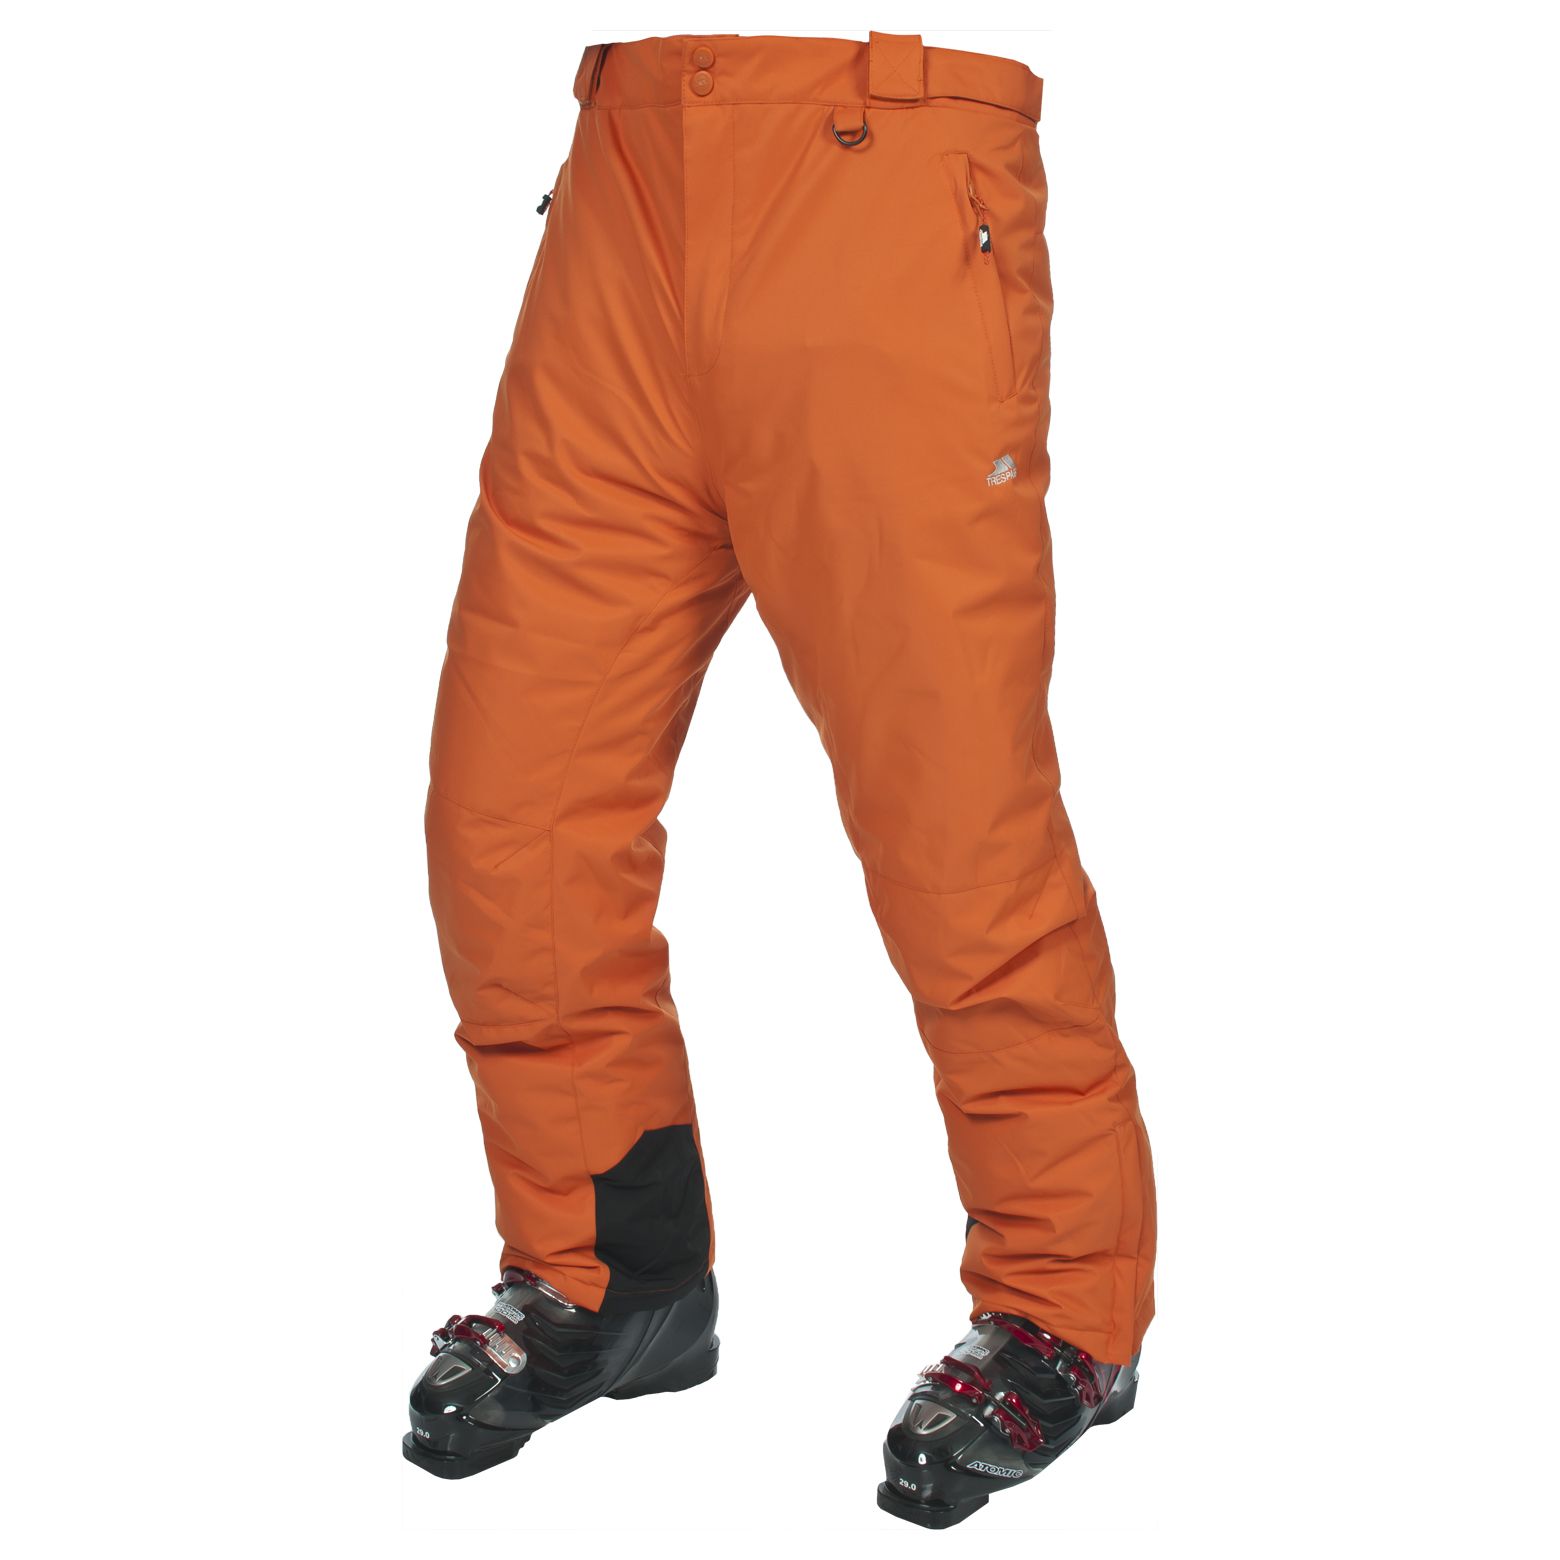 Mulford Mens Ski Pants - Orange